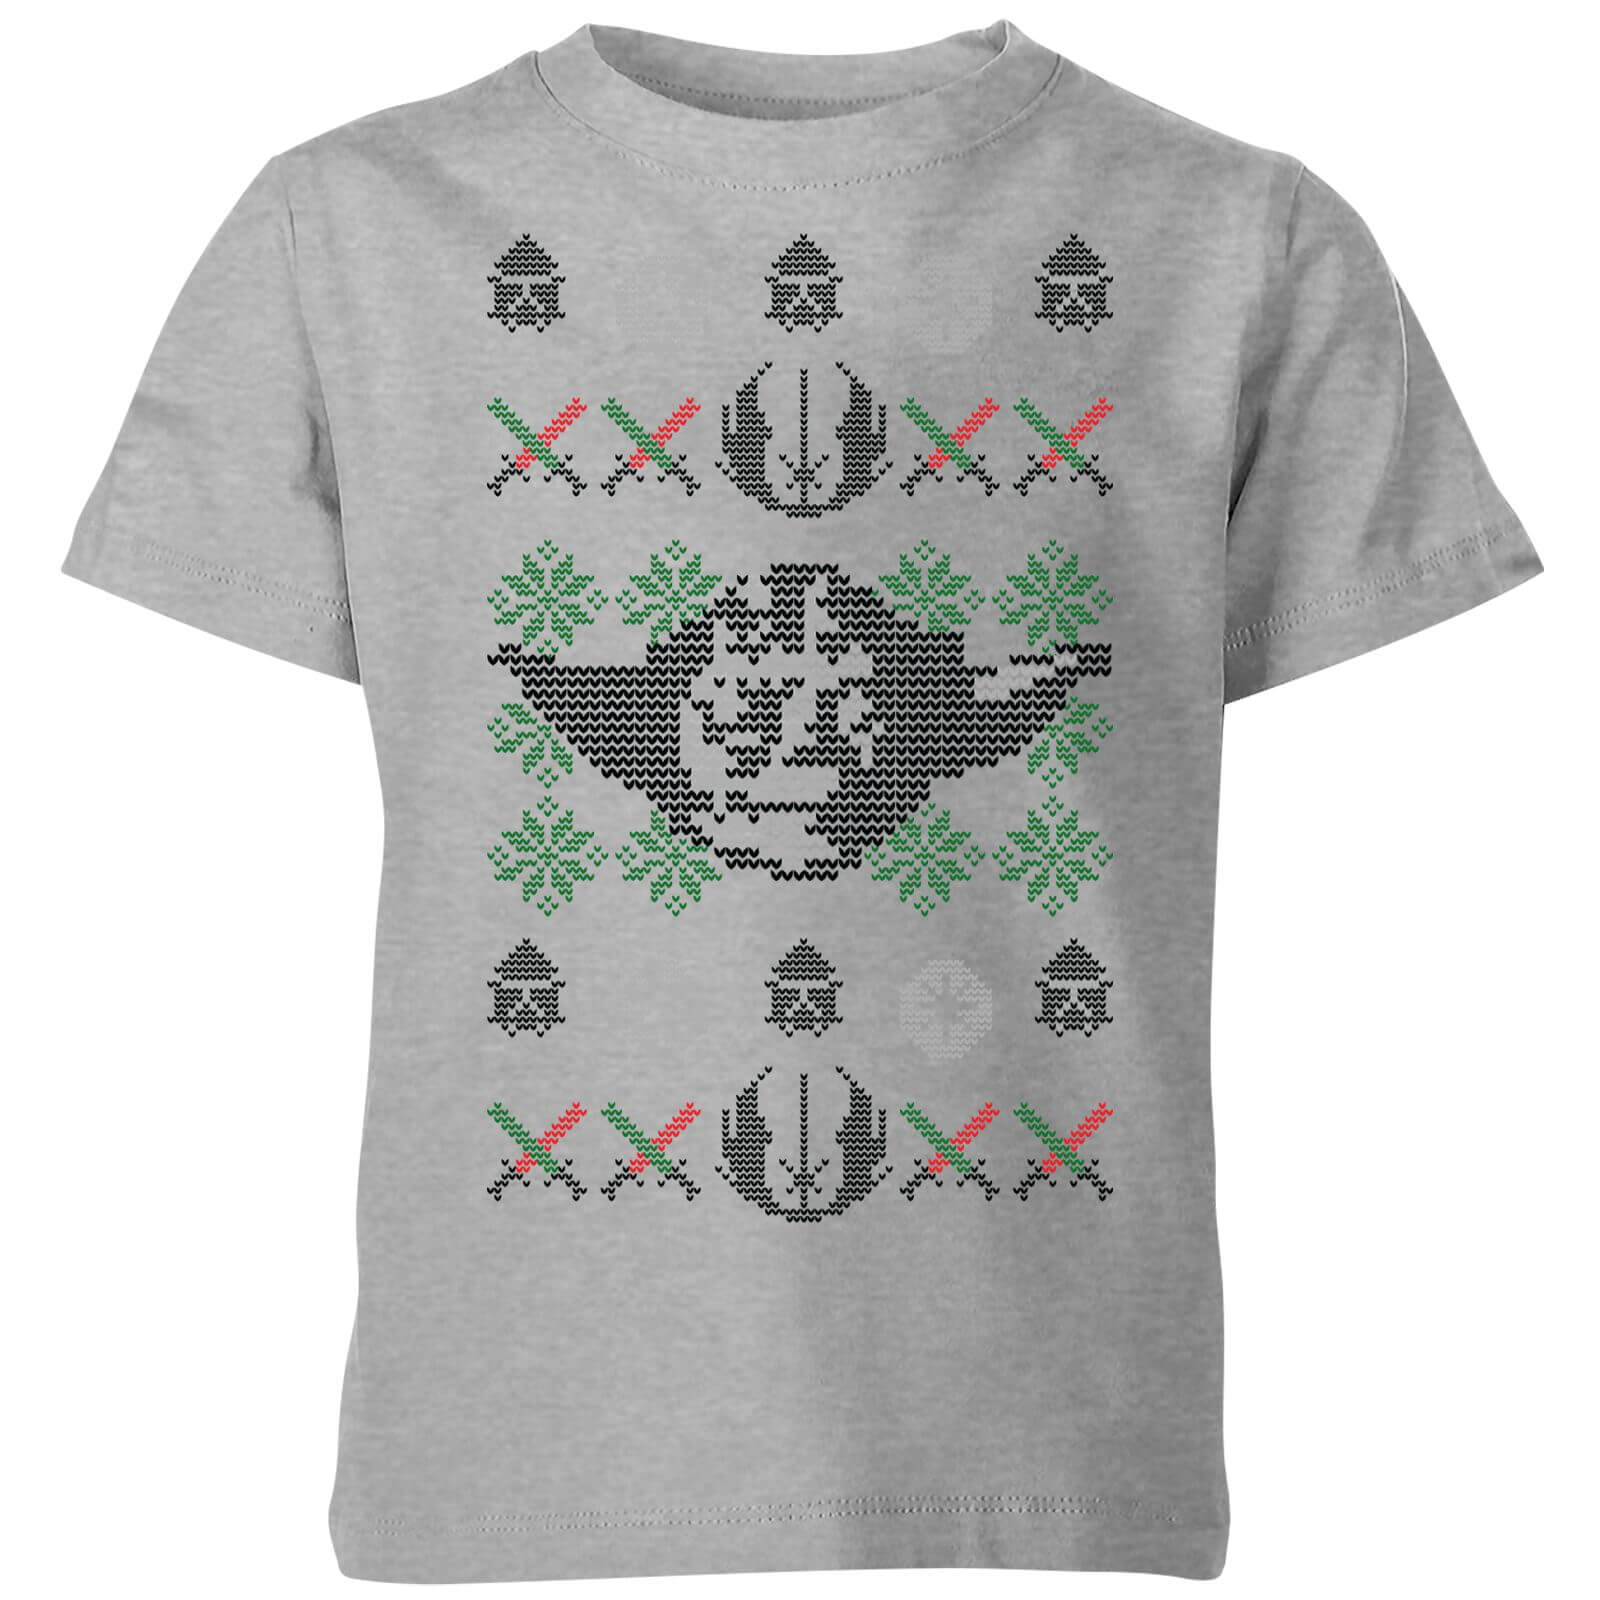 Star Wars Yoda Face Knit Kids' Christmas T-Shirt - Grey - 9-10 Years - Grey